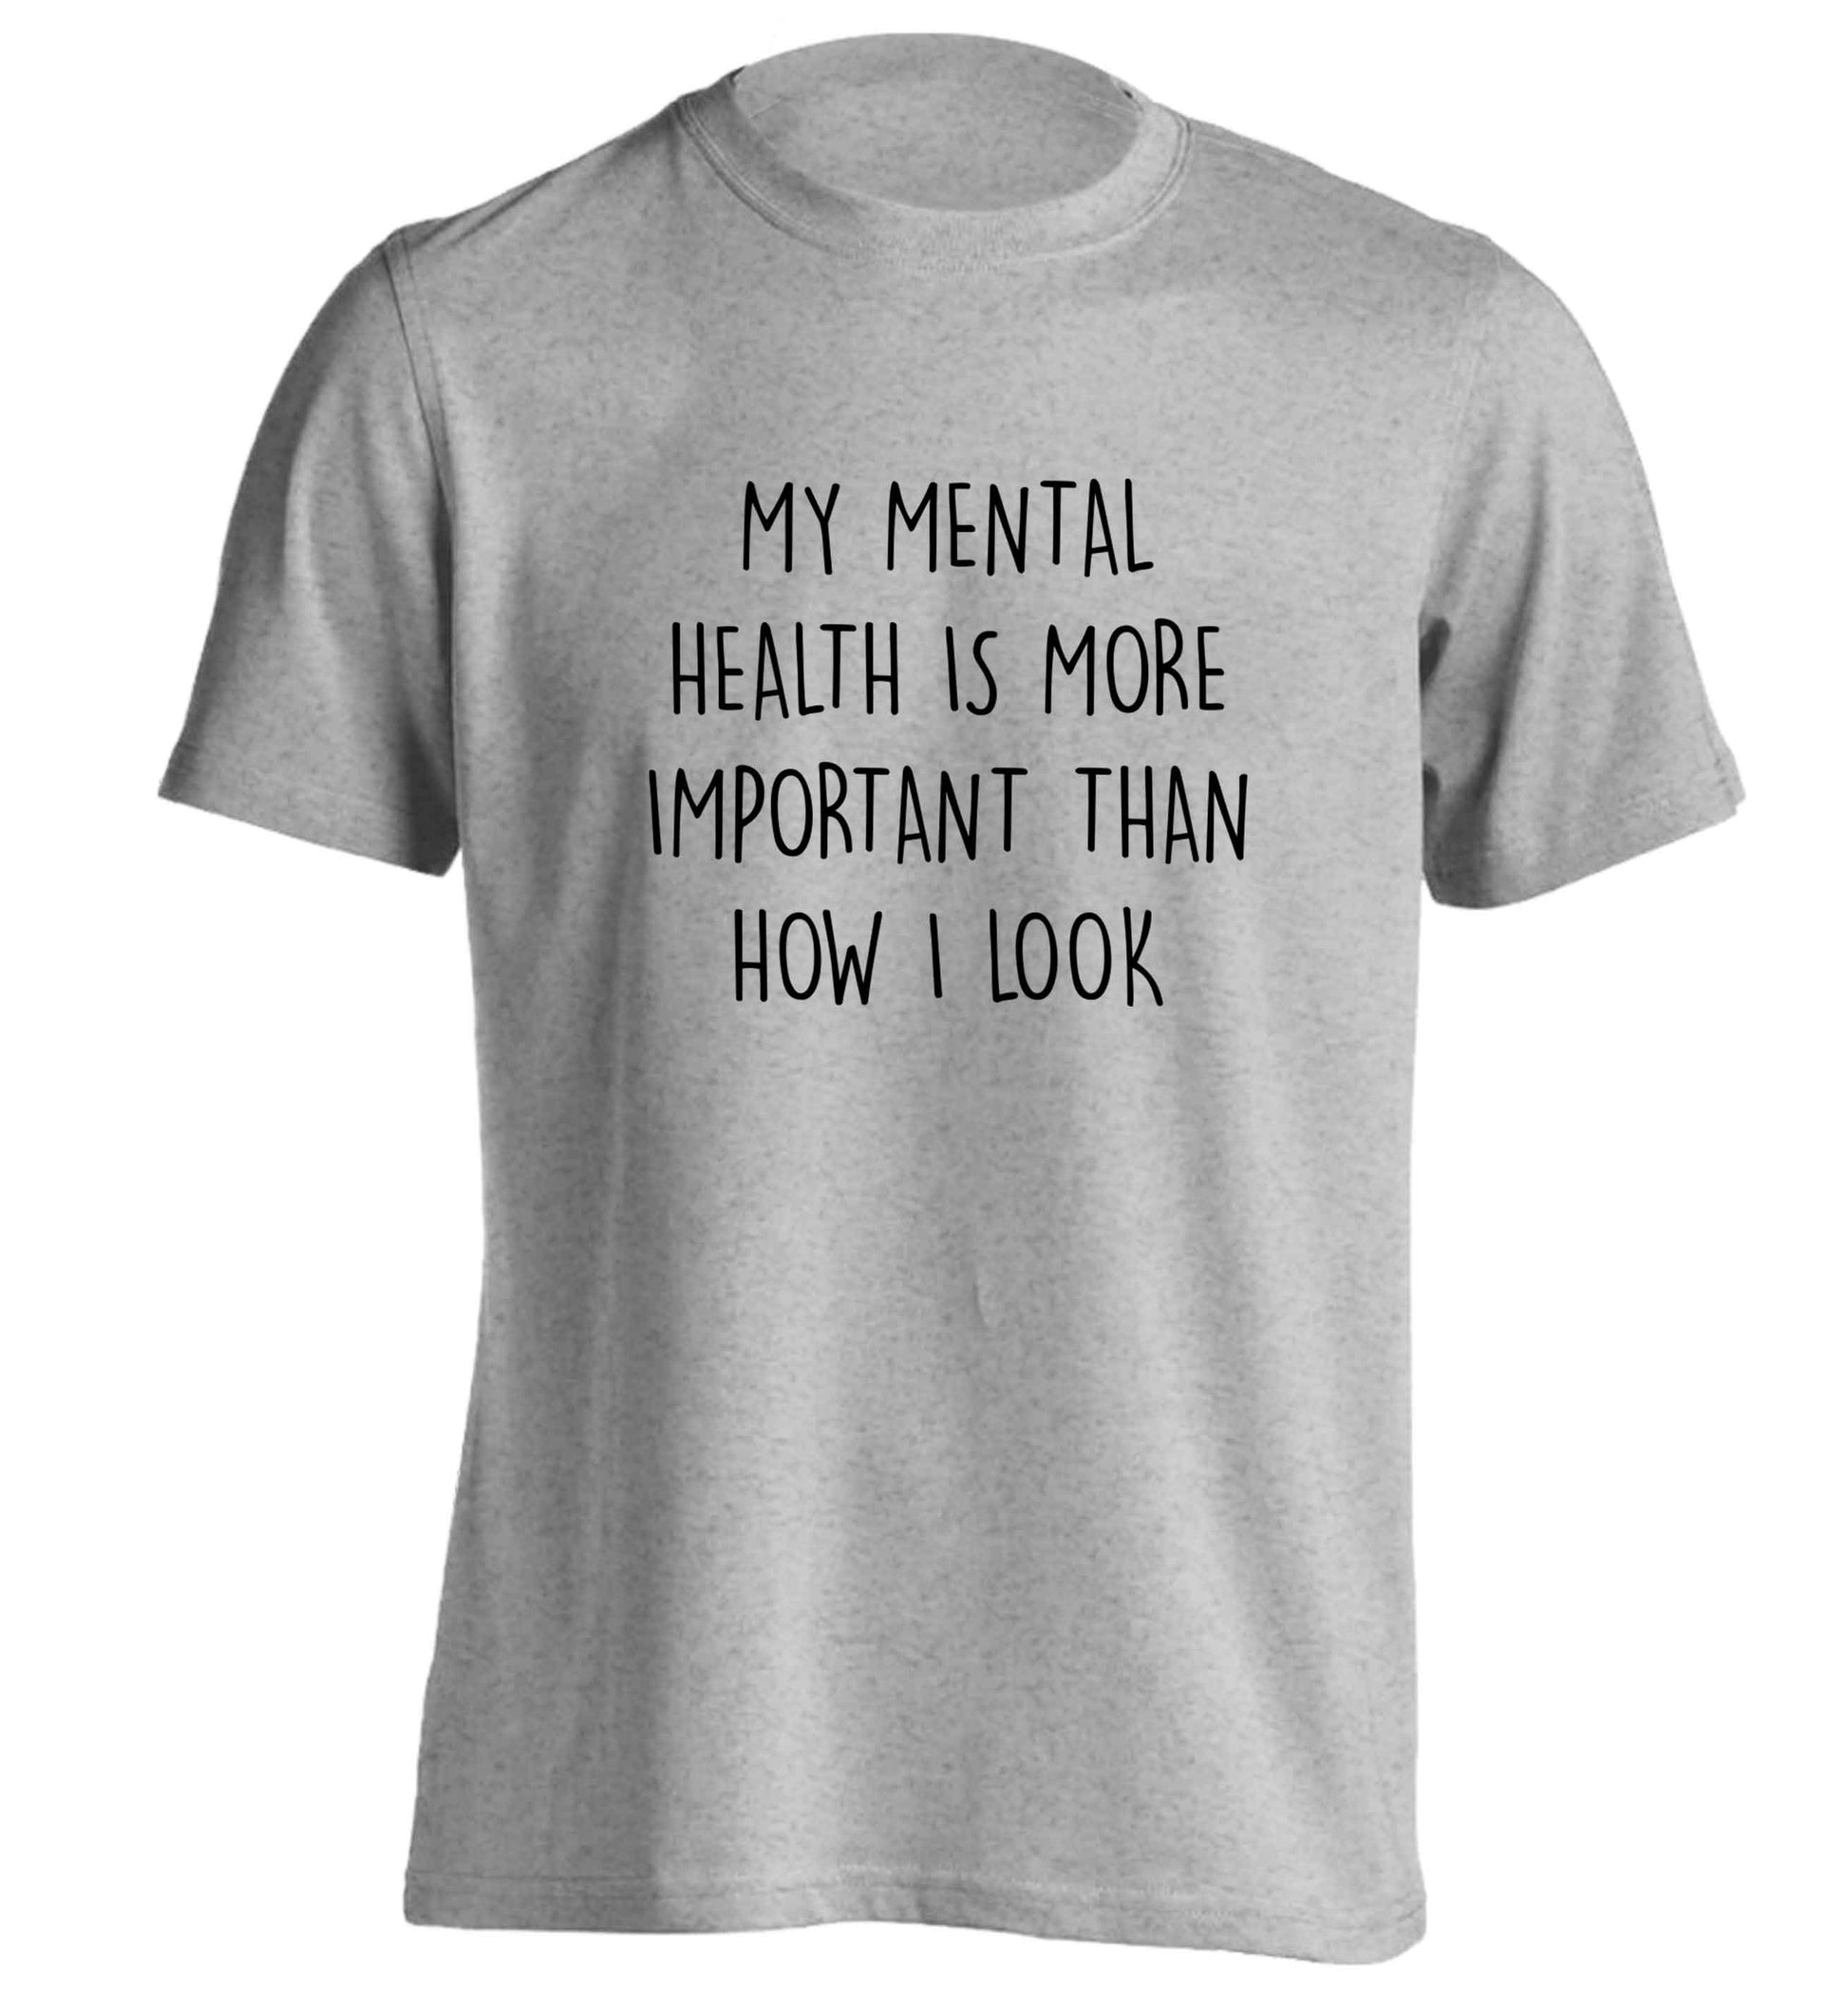 My mental health is more importnat than how I look adults unisex grey Tshirt 2XL